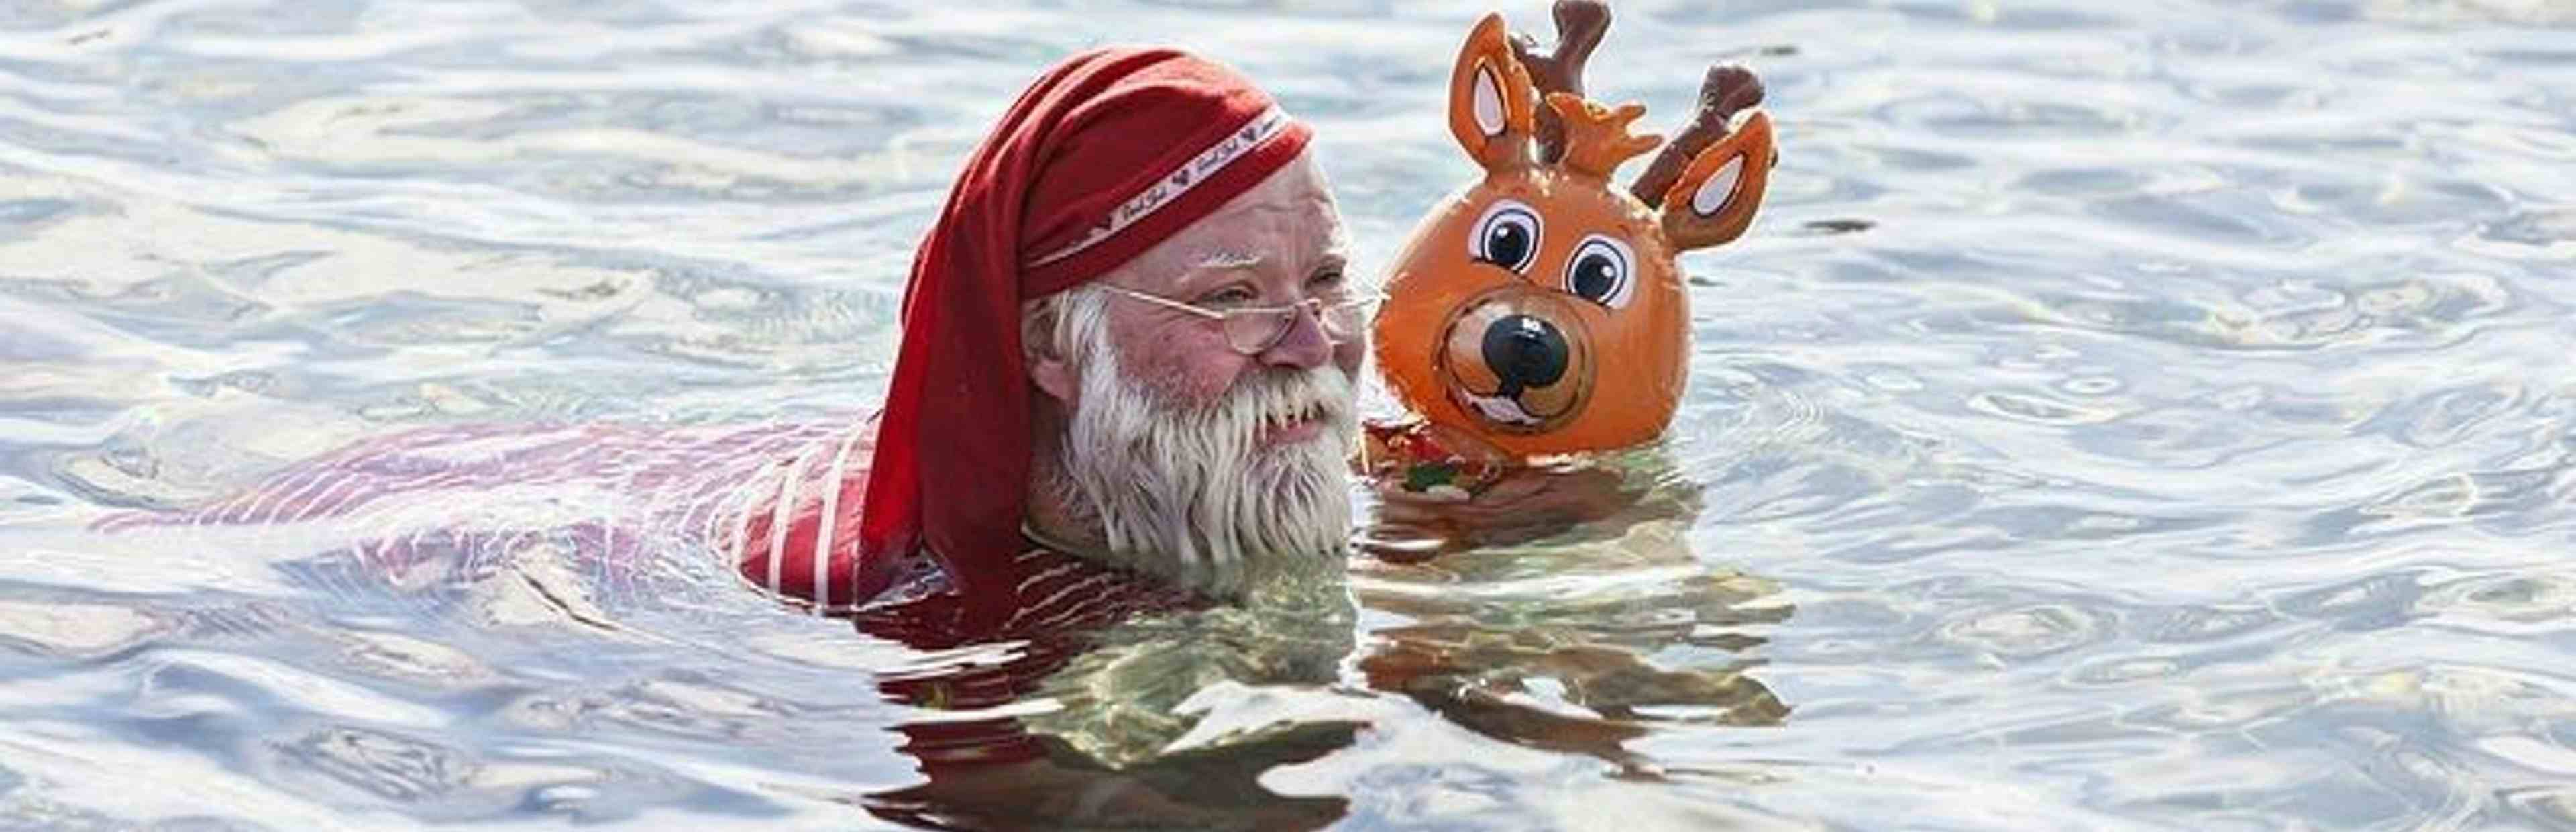 Santa swimming in lake with Reindeer 